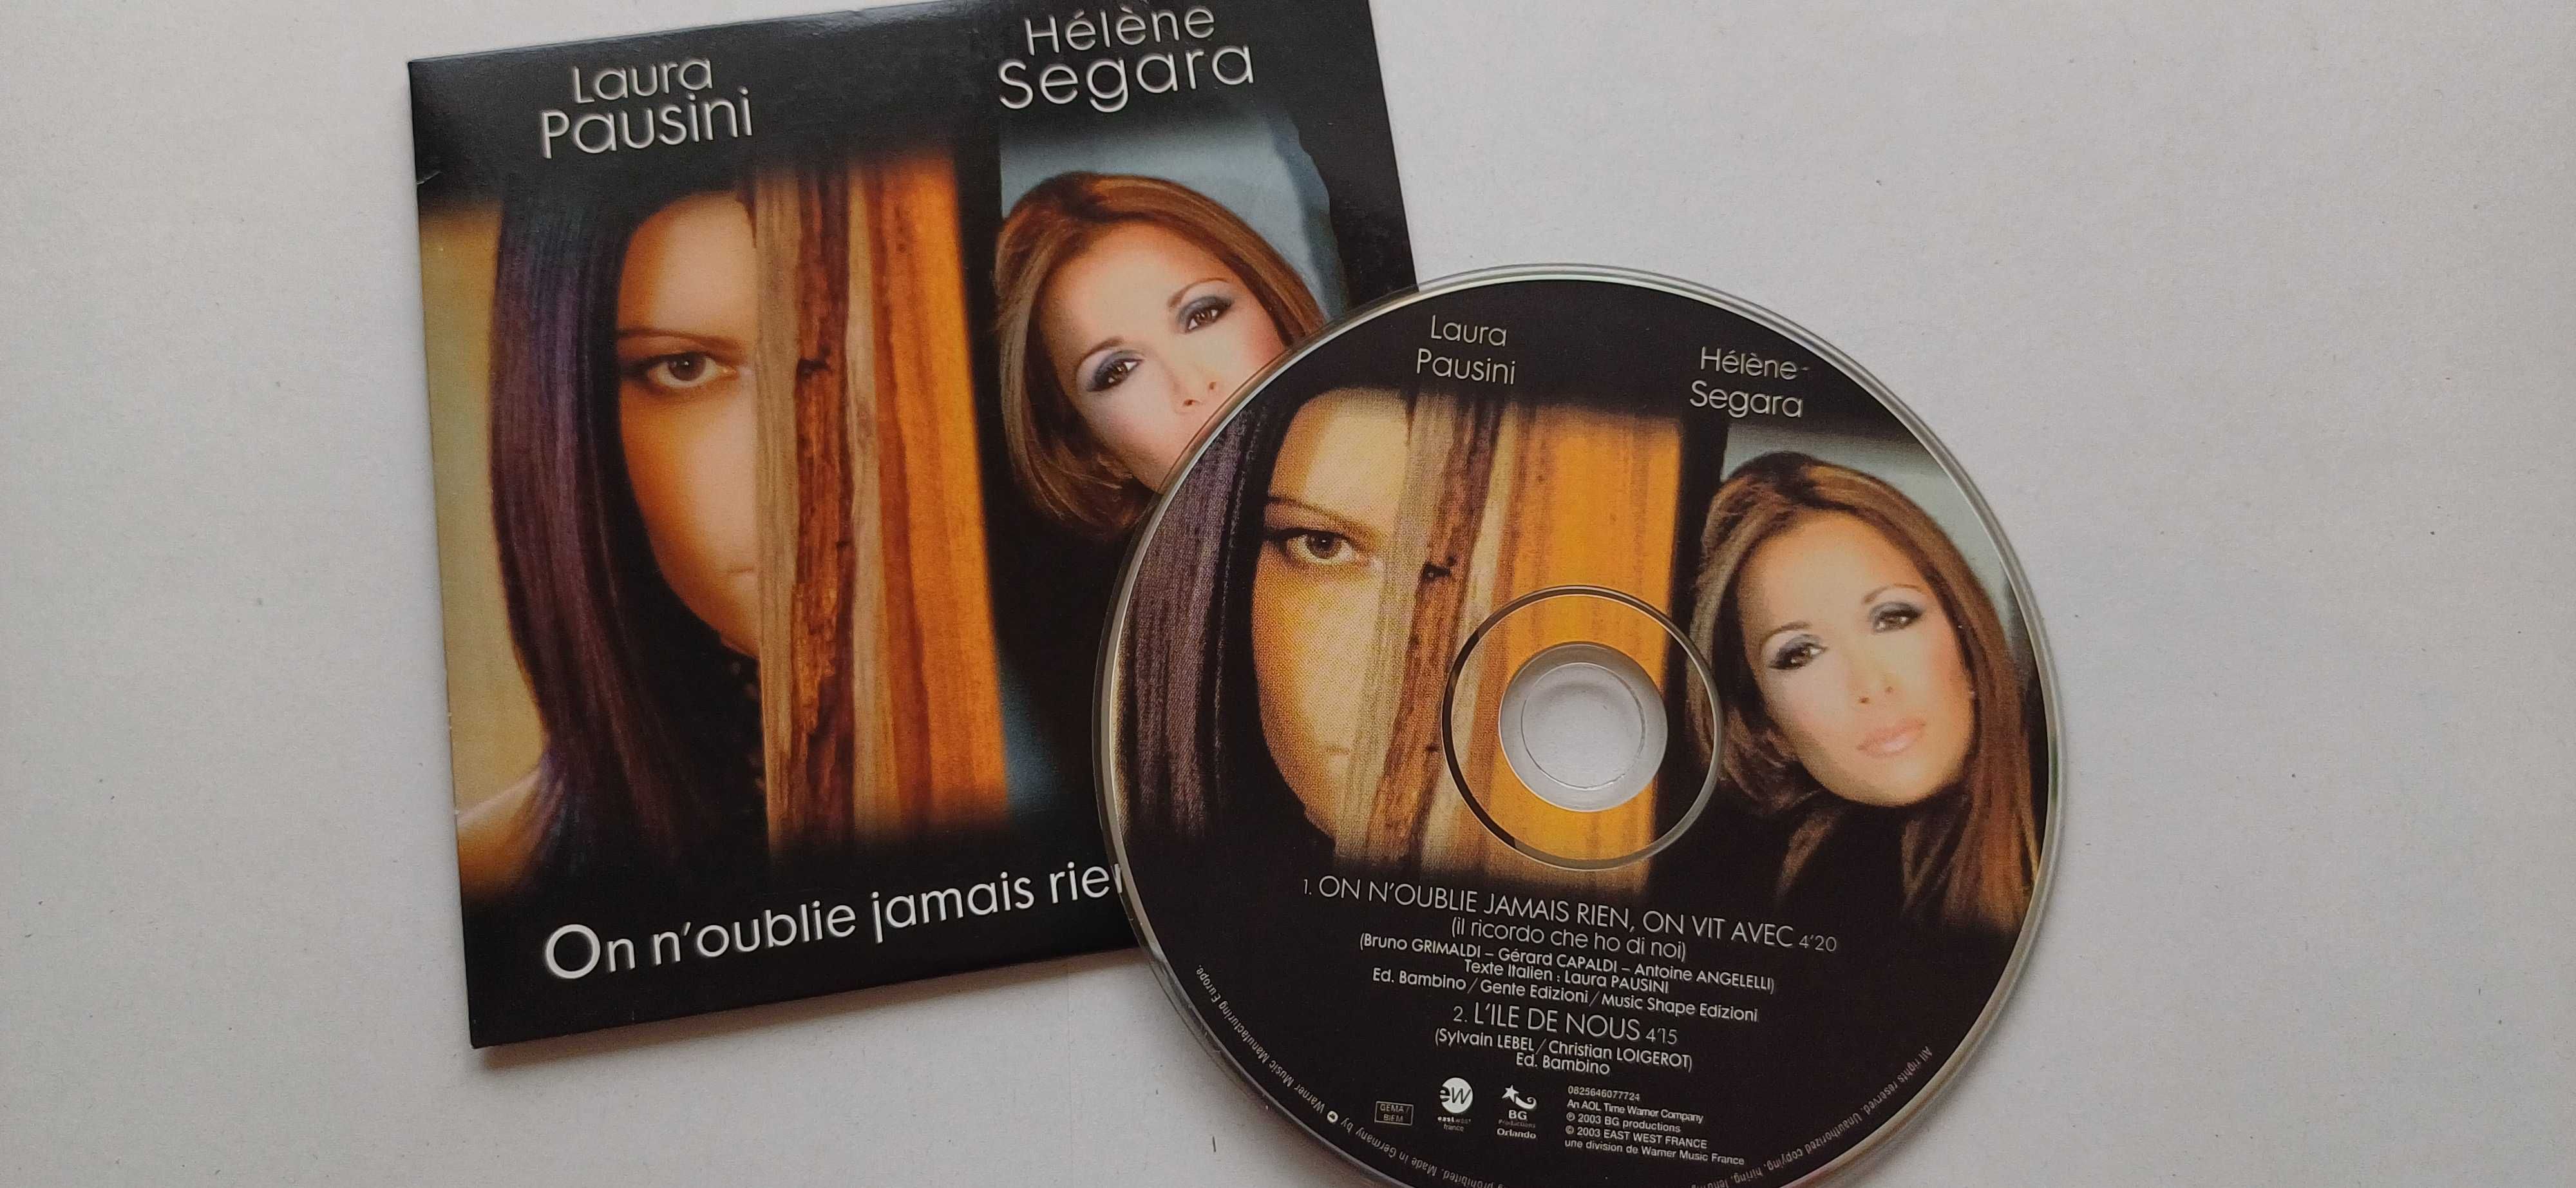 Laura Pausini: CD single on n'oublie jamais rien on vit avec